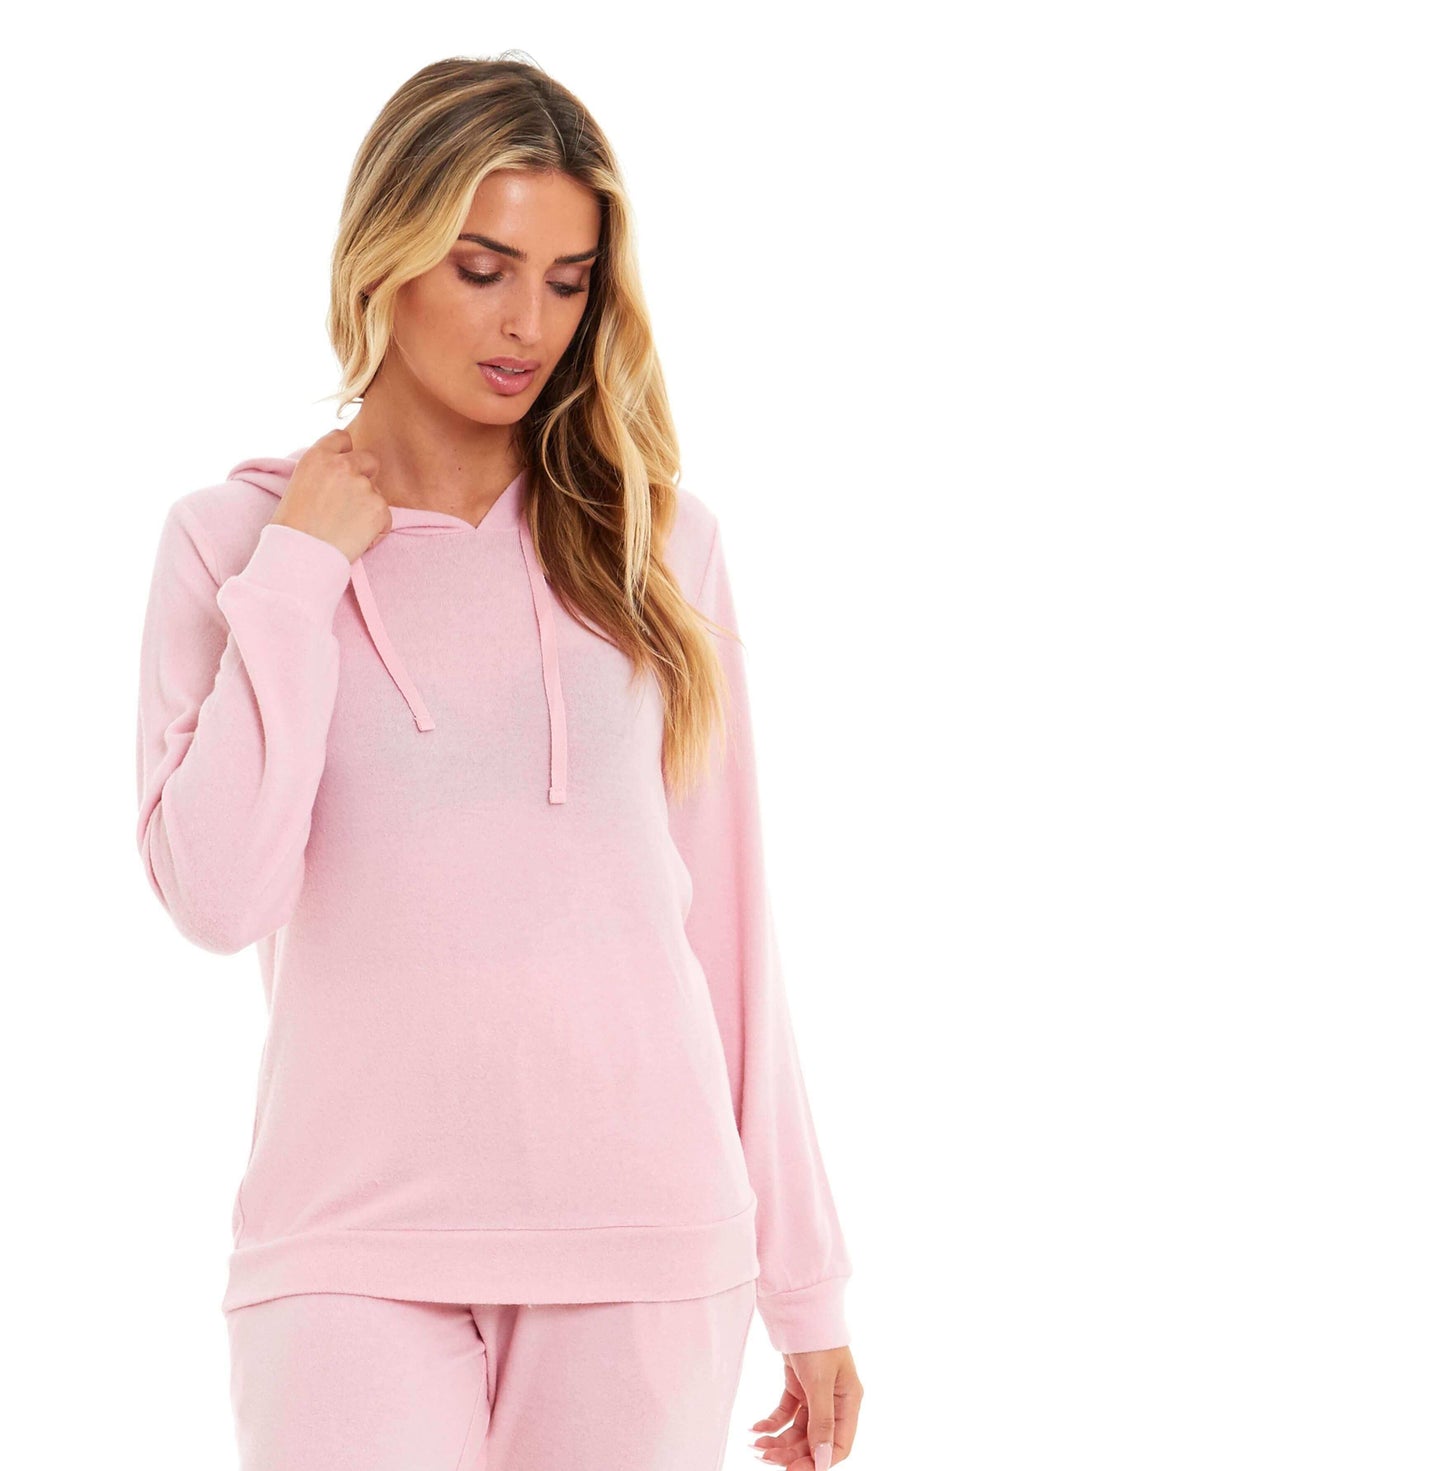 Women's Super Cosy Hooded Pyjama Set, Ladies Stretchable Loungewear. Buy now for £20.00. A Pyjamas by Daisy Dreamer. 12-14, 16-18, 20-22, 8-10, blush pink, bridesmaid, charcoal, dusky pink, fleece, grey, gym, hotel, ladies, large, loungewear, medium, nigh